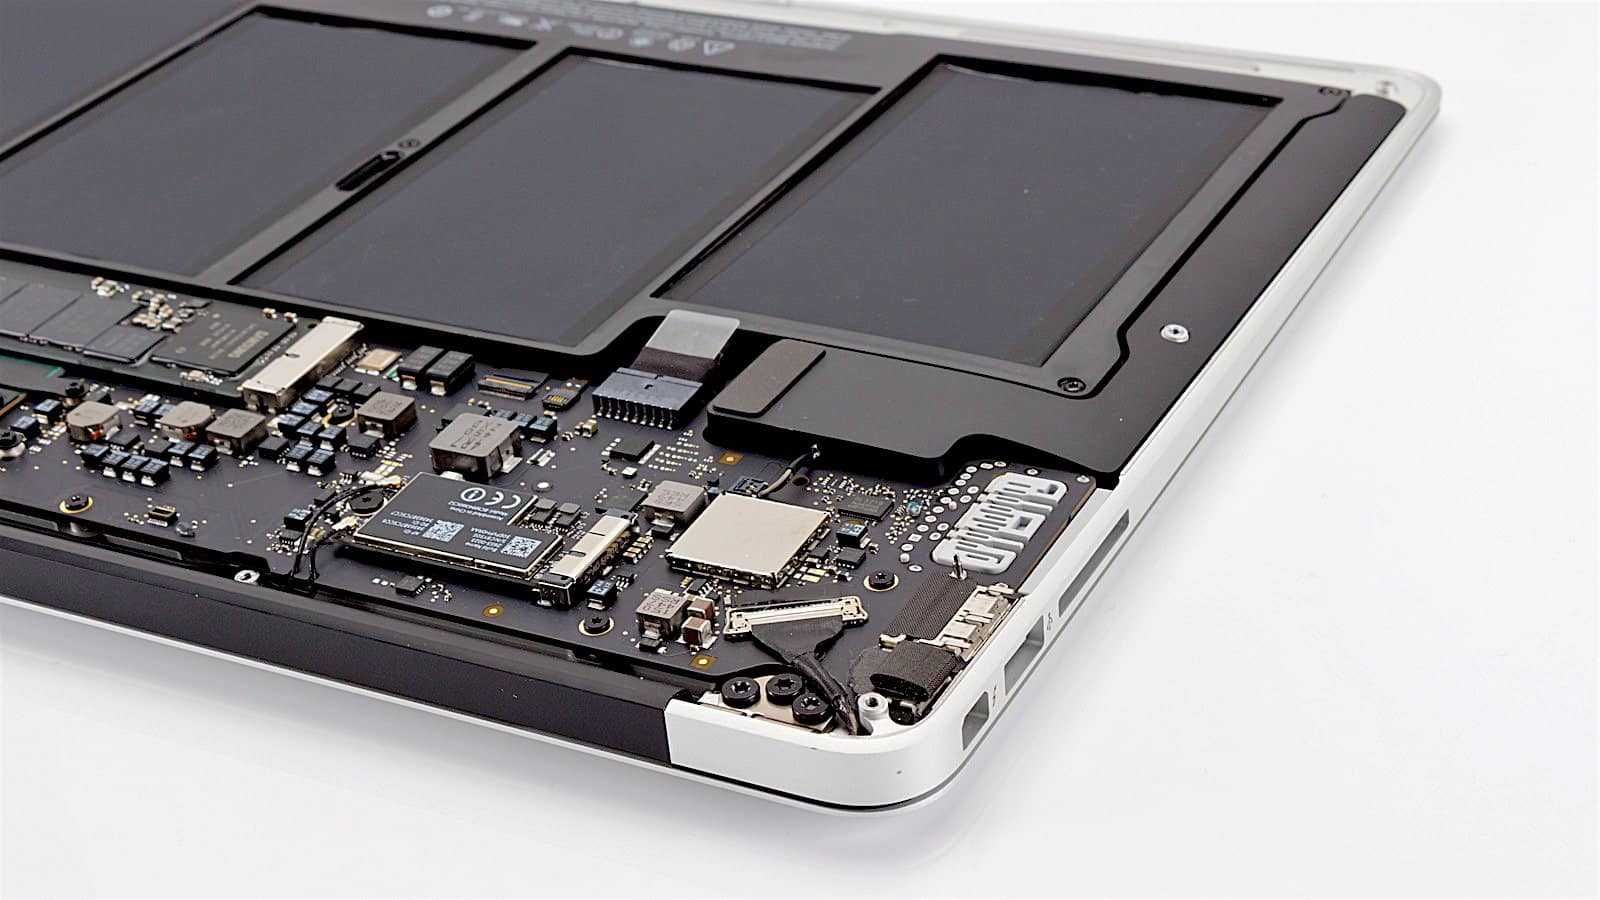 Naprawa Elektroniki - iPhone, Macbook, iMac